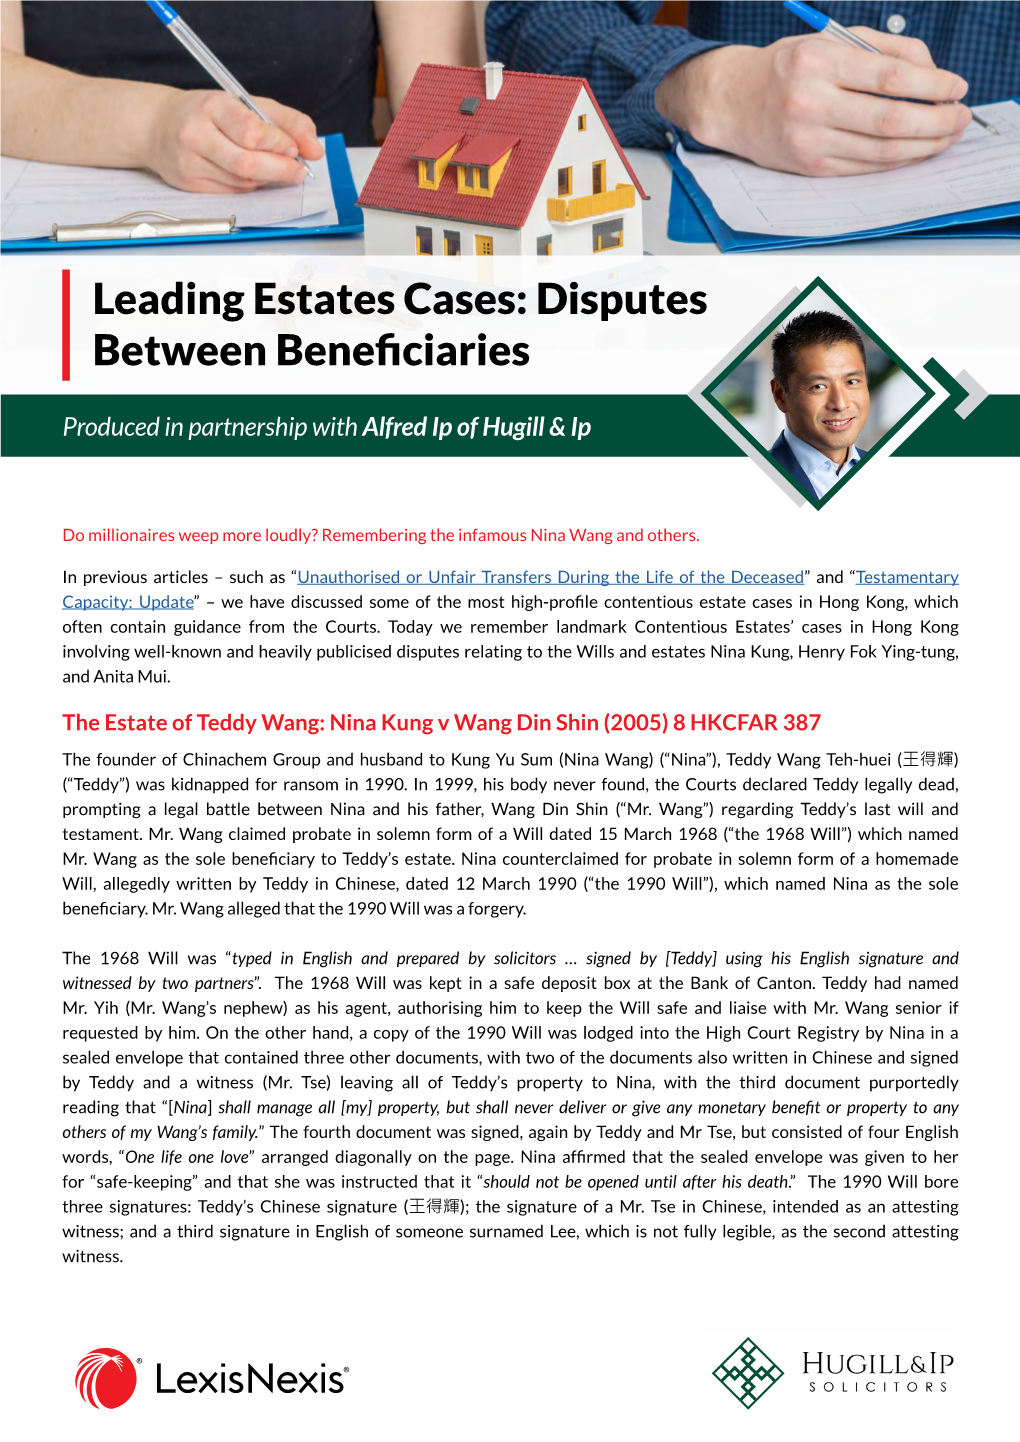 Leading Estates Cases: Disputes Between Beneficiaries